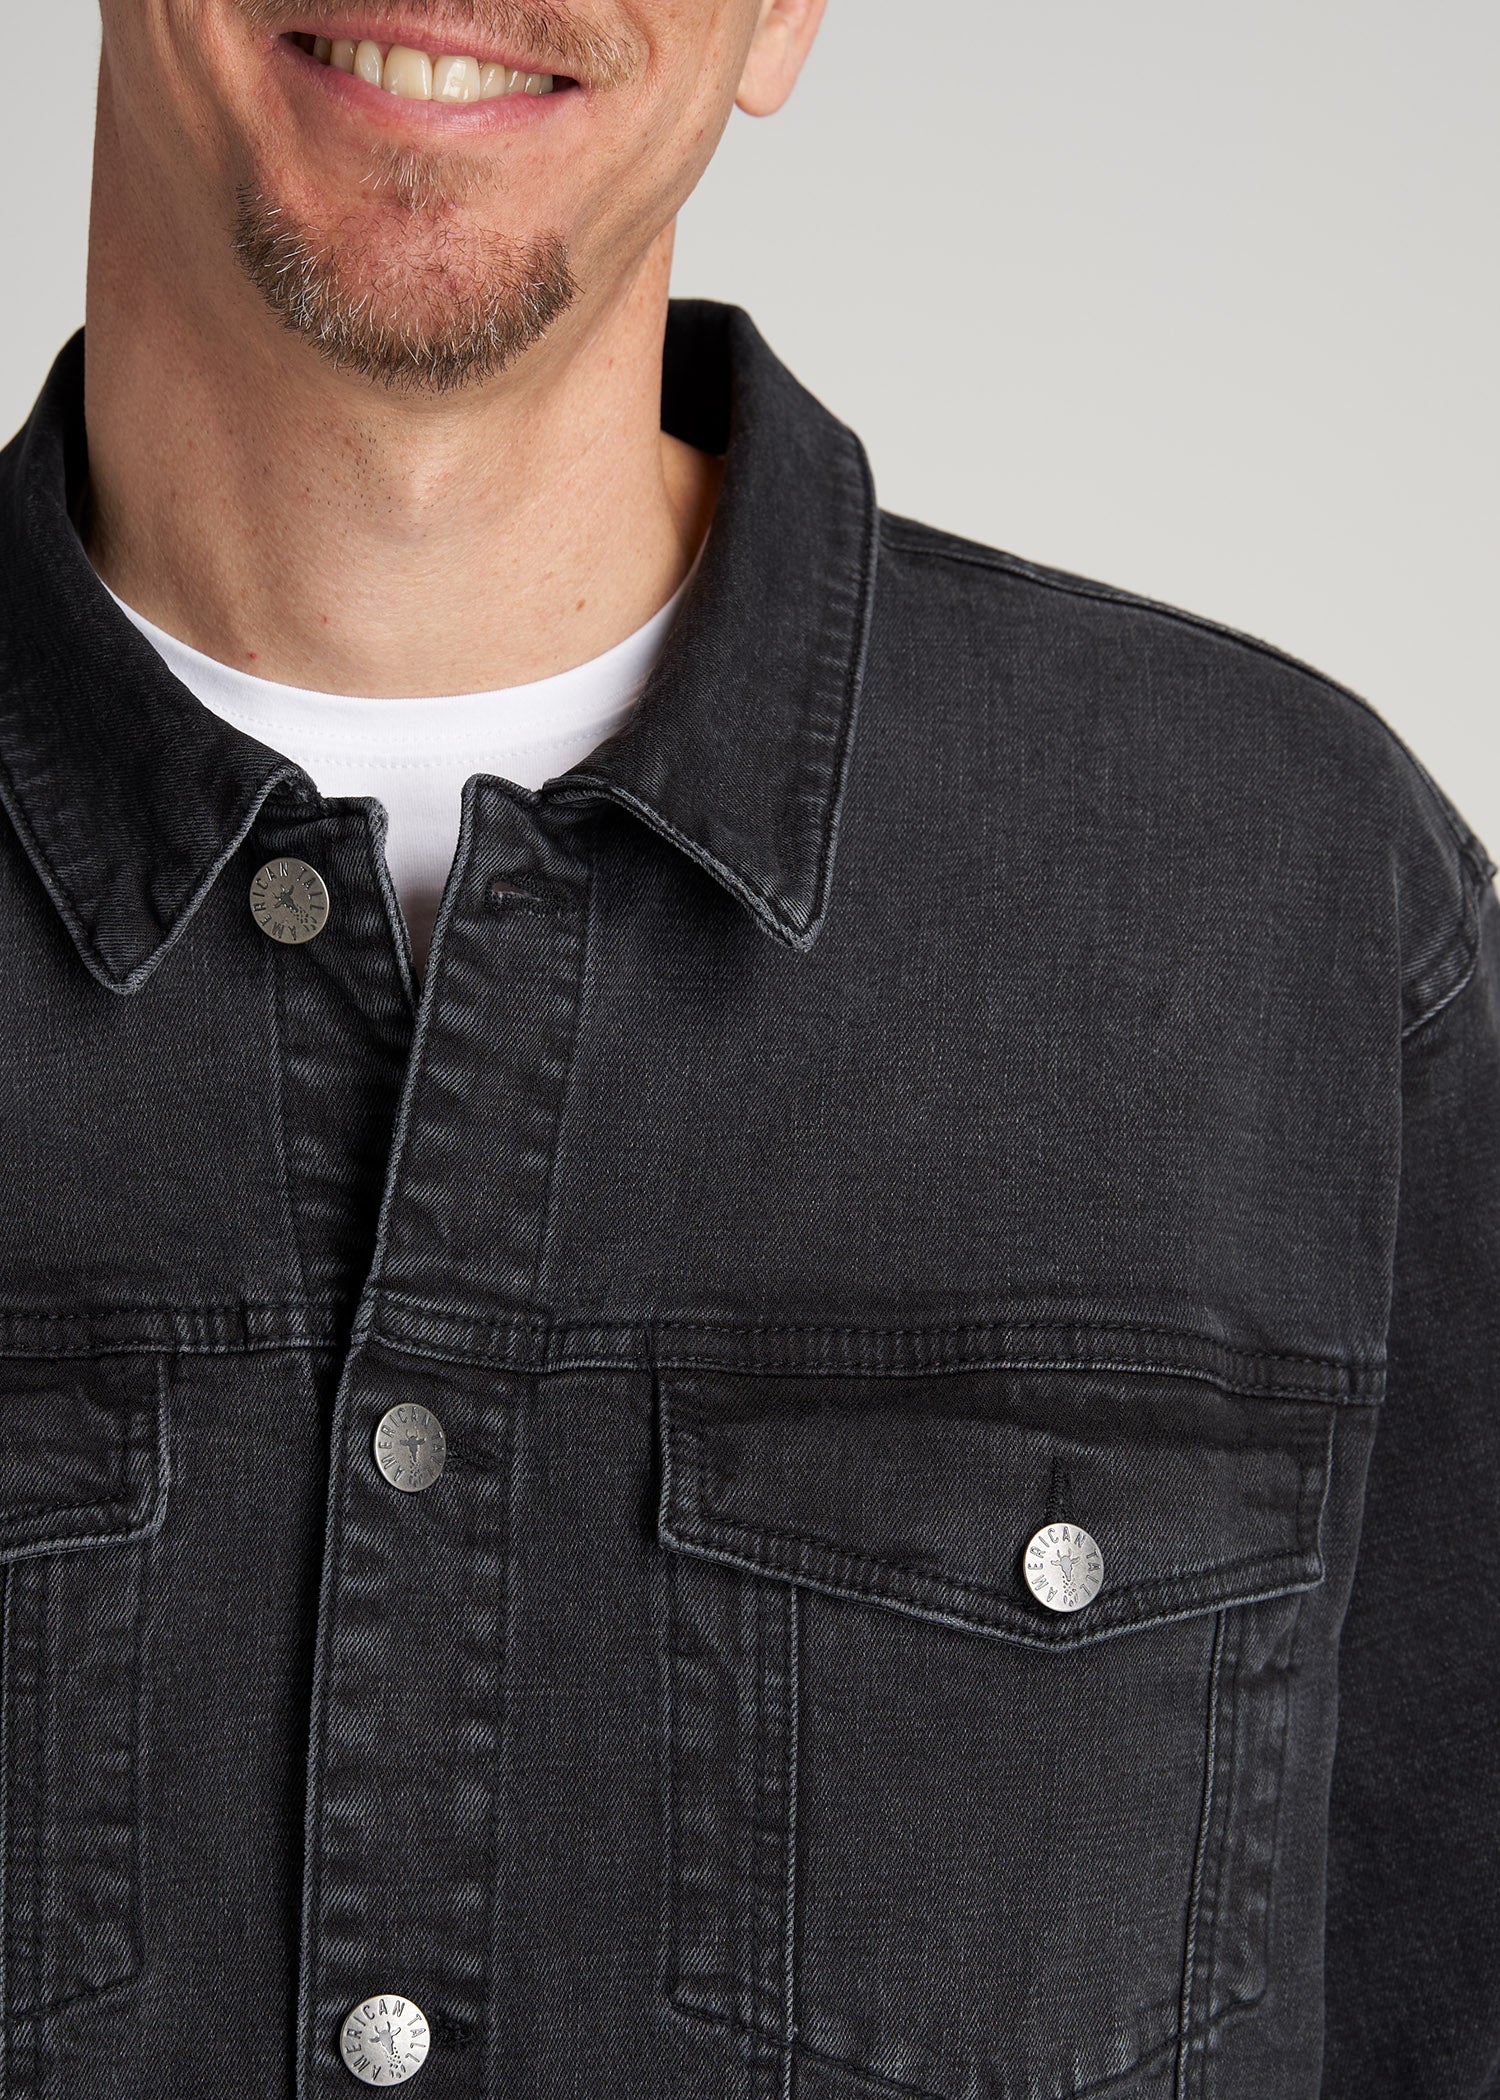 Men Black Denim Jacket Lapel Collar Casual Jeans Loose Coat Button Fashion  Retro | eBay